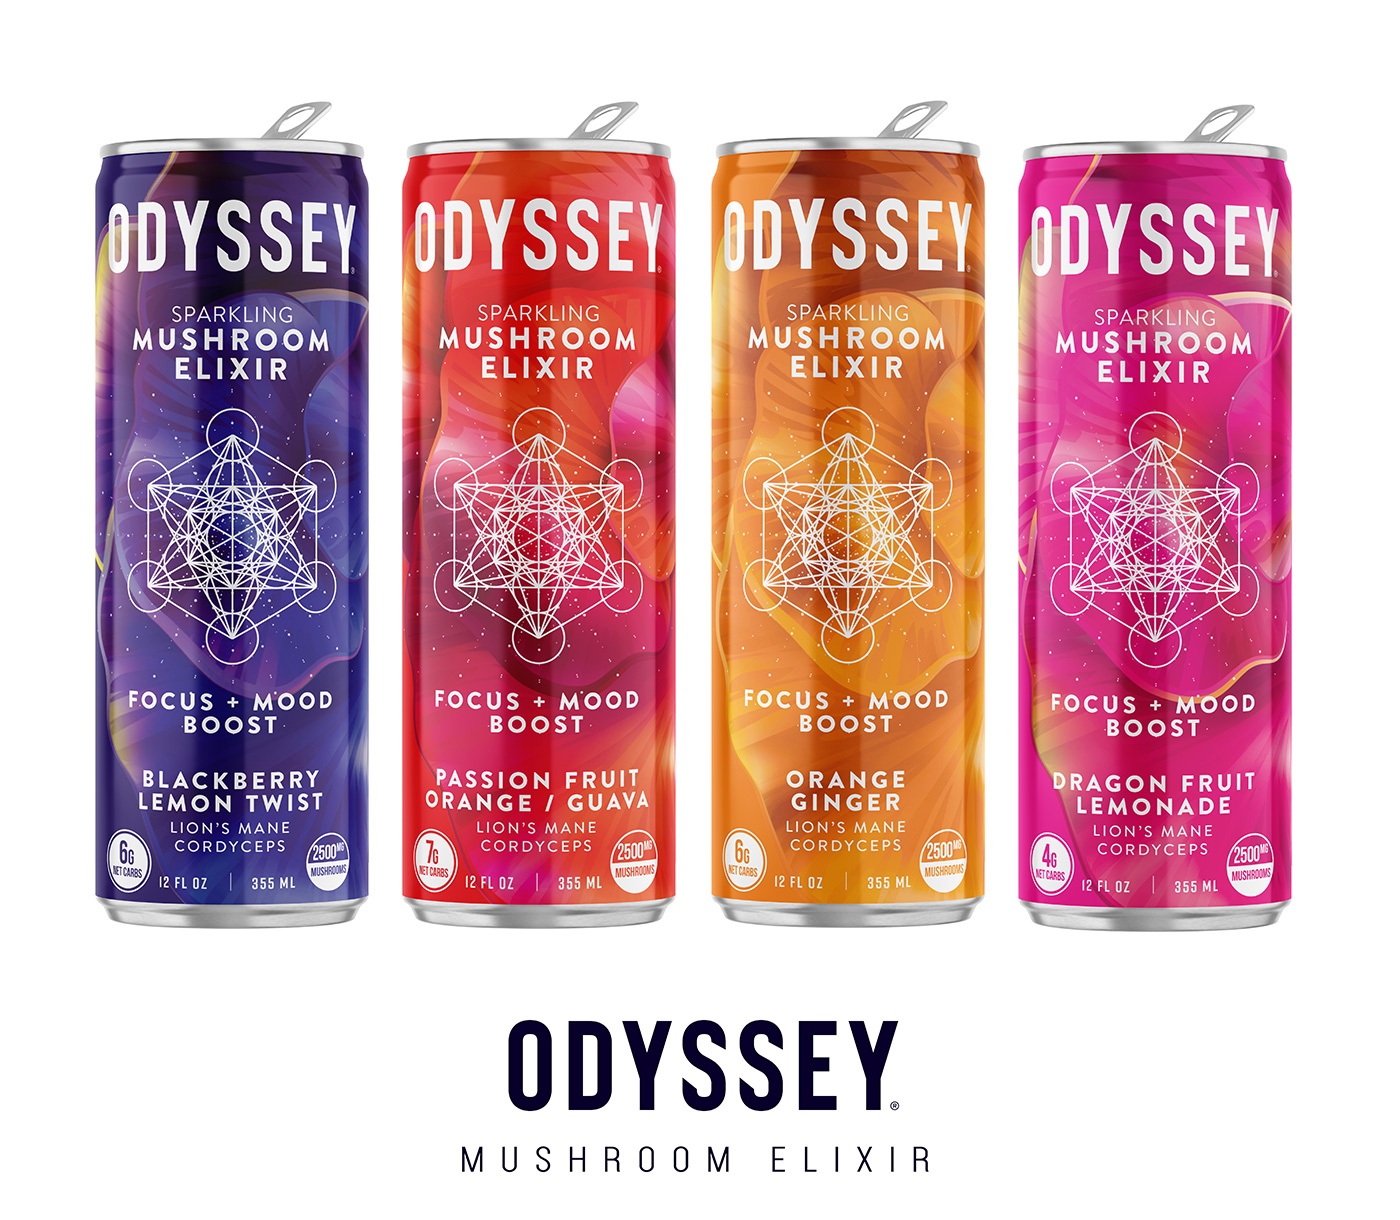 odyssey mushroom elixir lineup